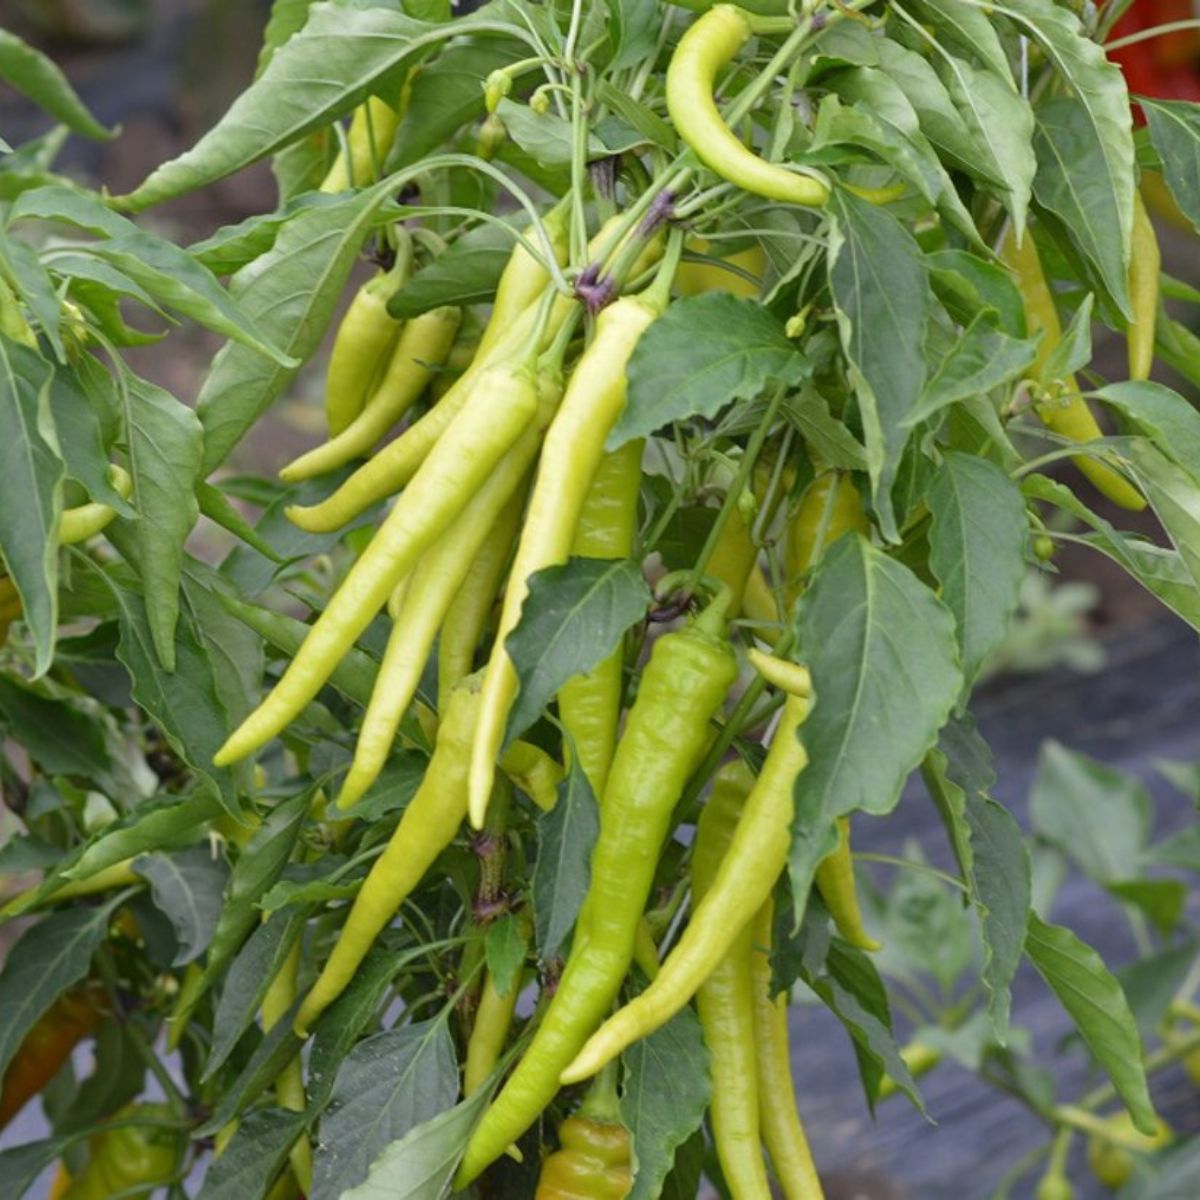 Seminte de legume profesionale - Seminte de ardei iute Iancu F1, 100 seminte, Hektar, hectarul.ro